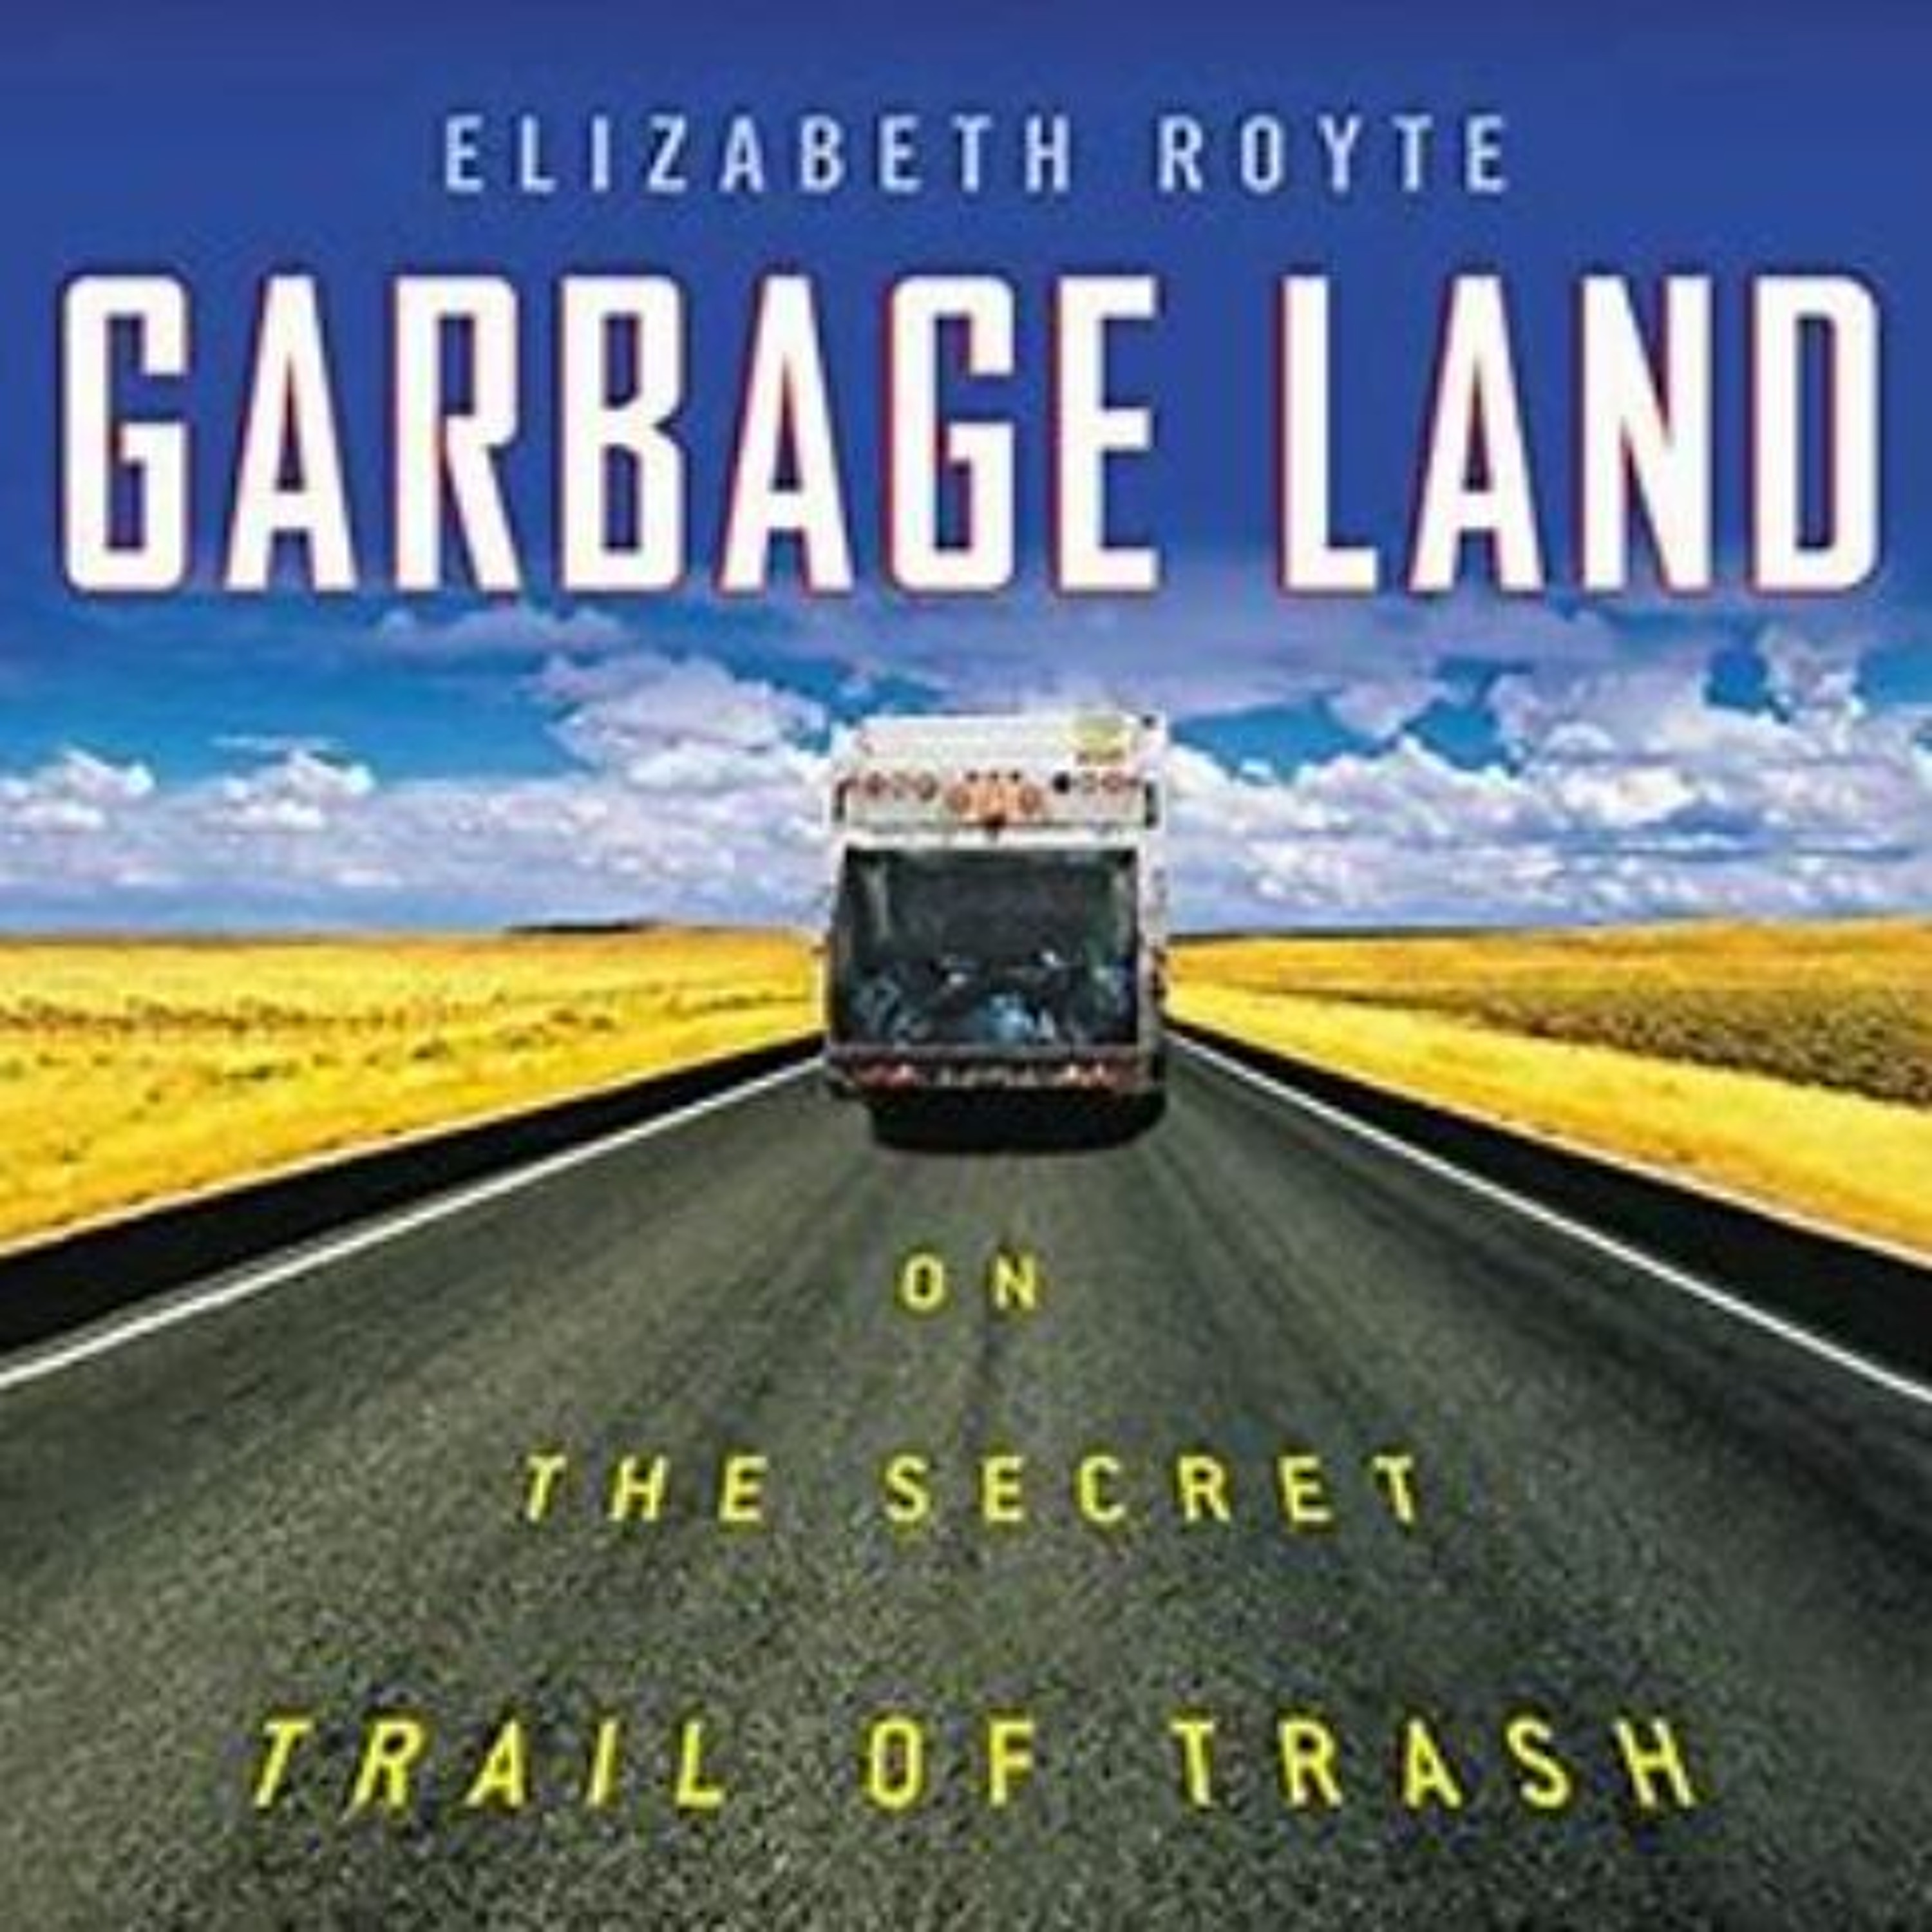 ”Garbage Land” - The Complete Elizabeth Royte Interview